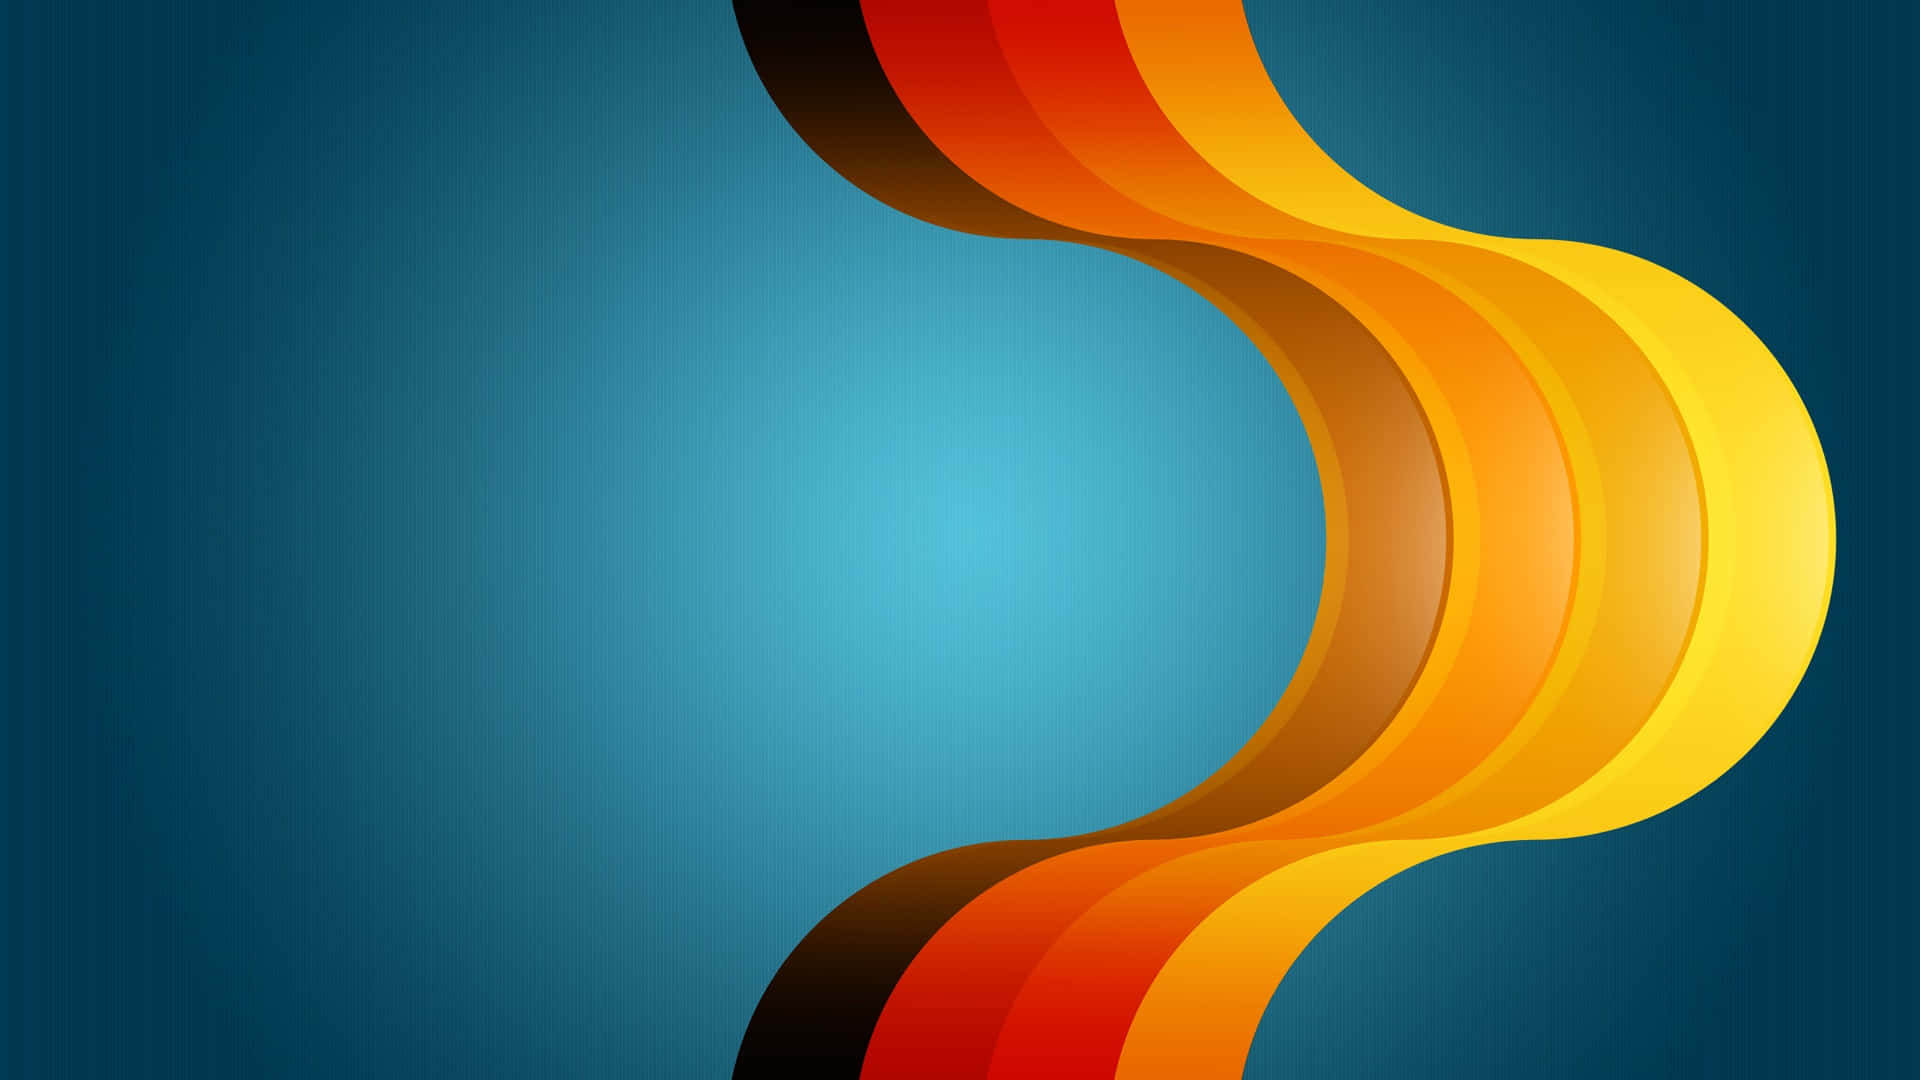 An abstract representation of vibrant orange